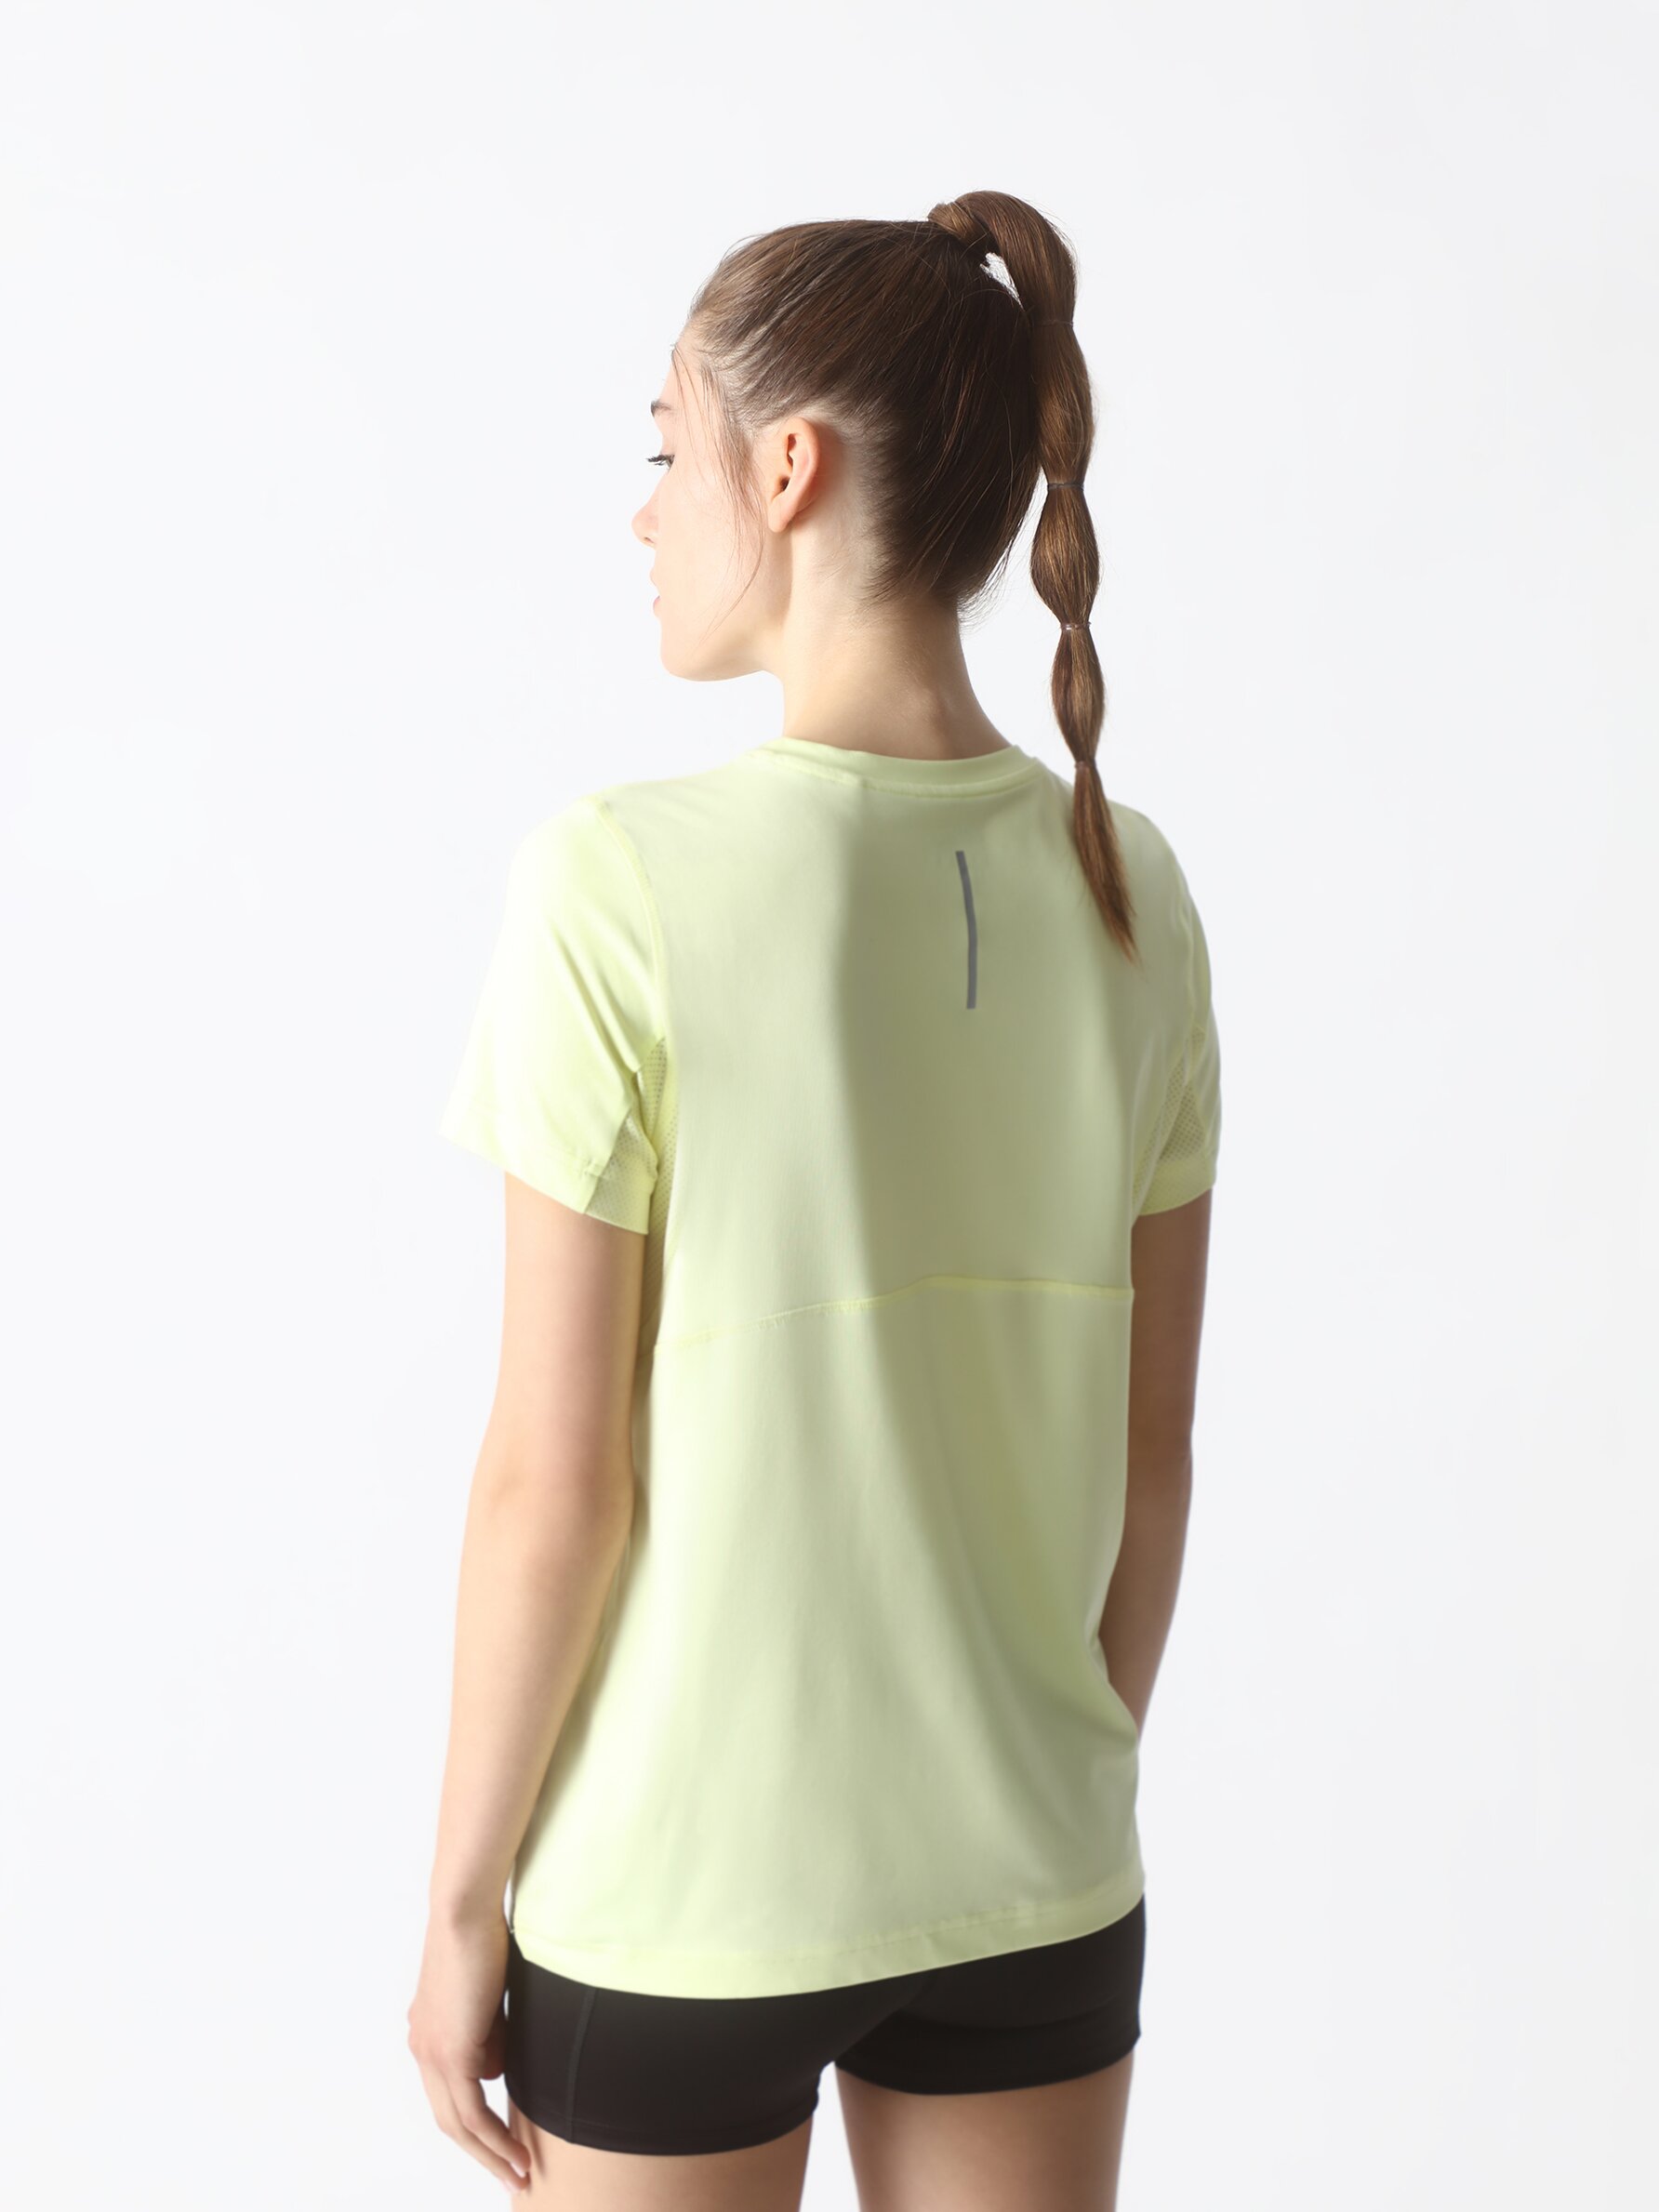 Camiseta deportiva manga corta - Ropa Deportiva - ROPA - Mujer 